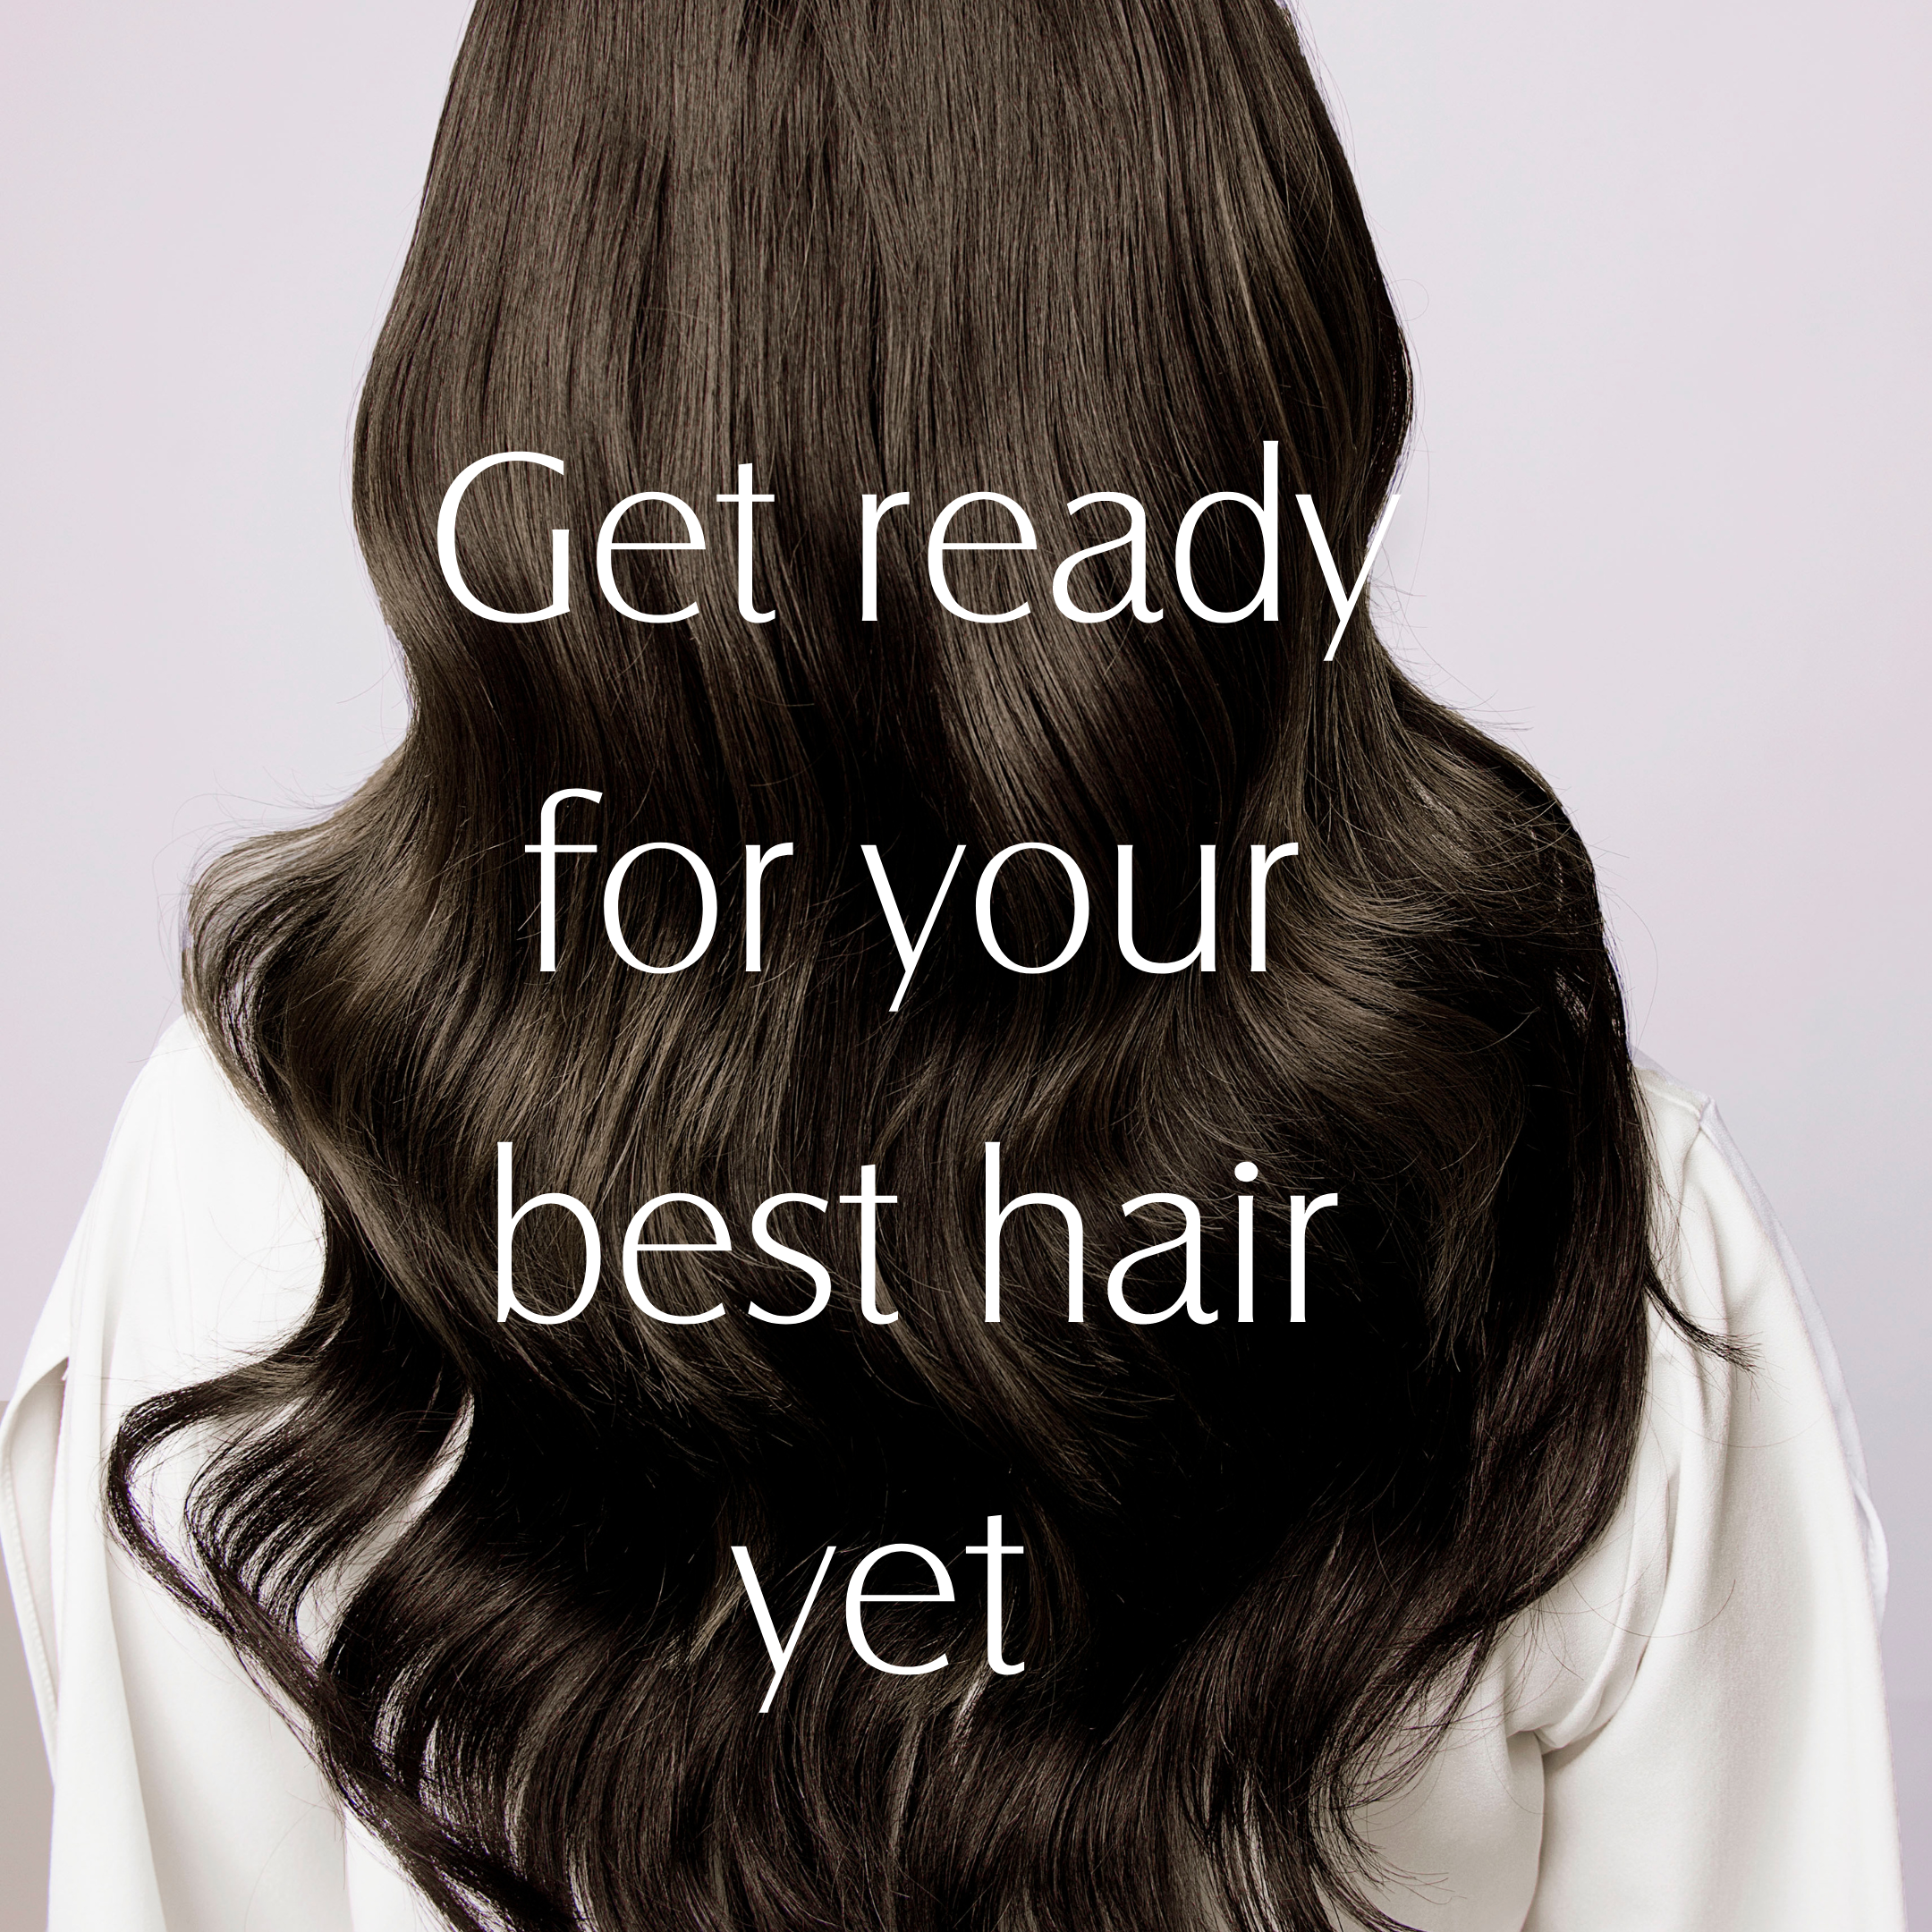 Promote Hair Growth and Improve Scalp Health with FWBEAUTY's New Rosemary Clove Hair & Scalp Oil and Hydrating Hair Mist